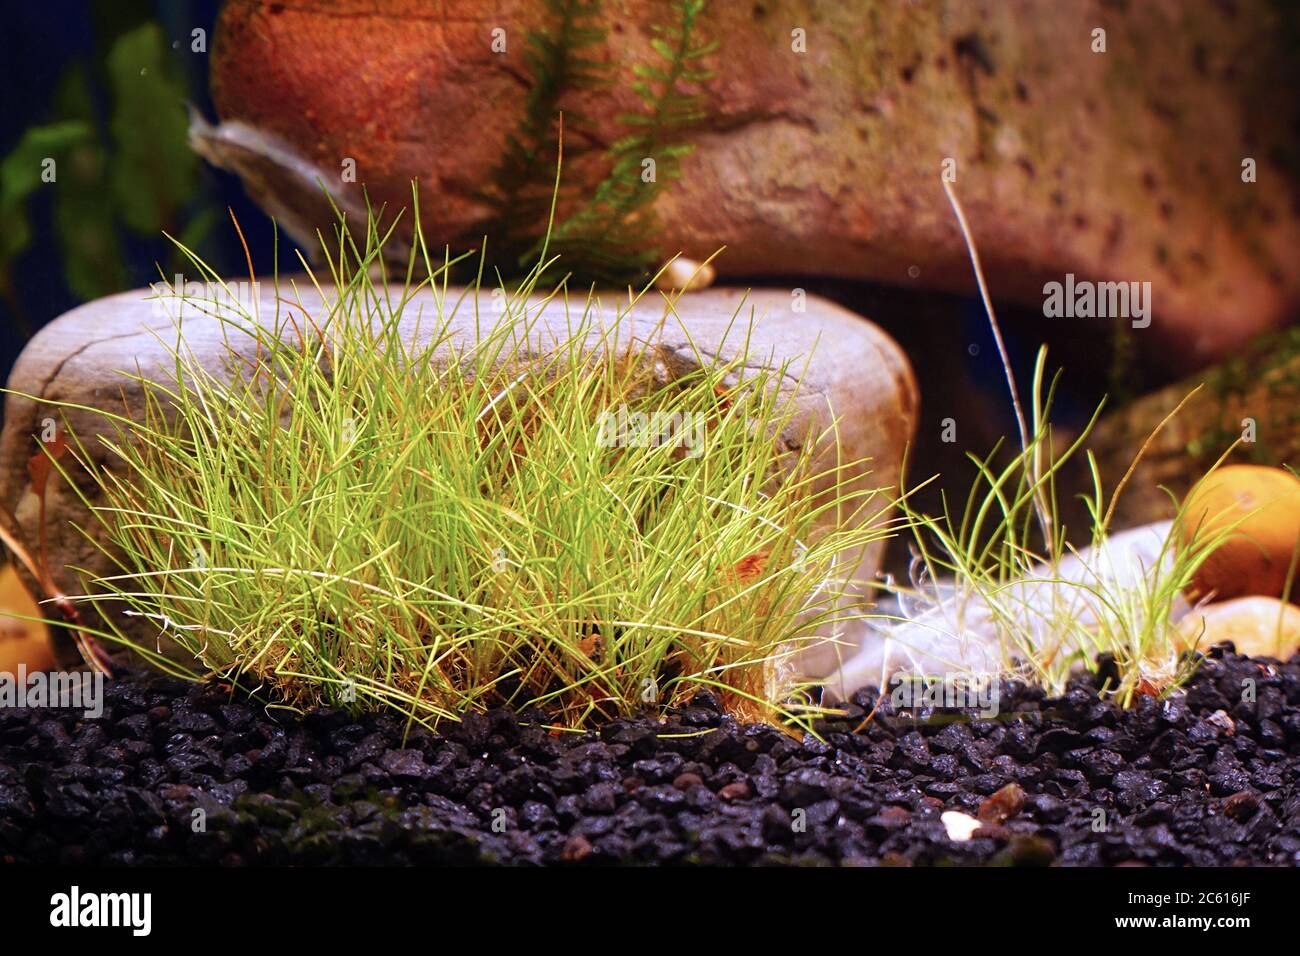 Groundcover eleocharis plant in an aquarium on a background of decorative stones. Selective focus Stock Photo